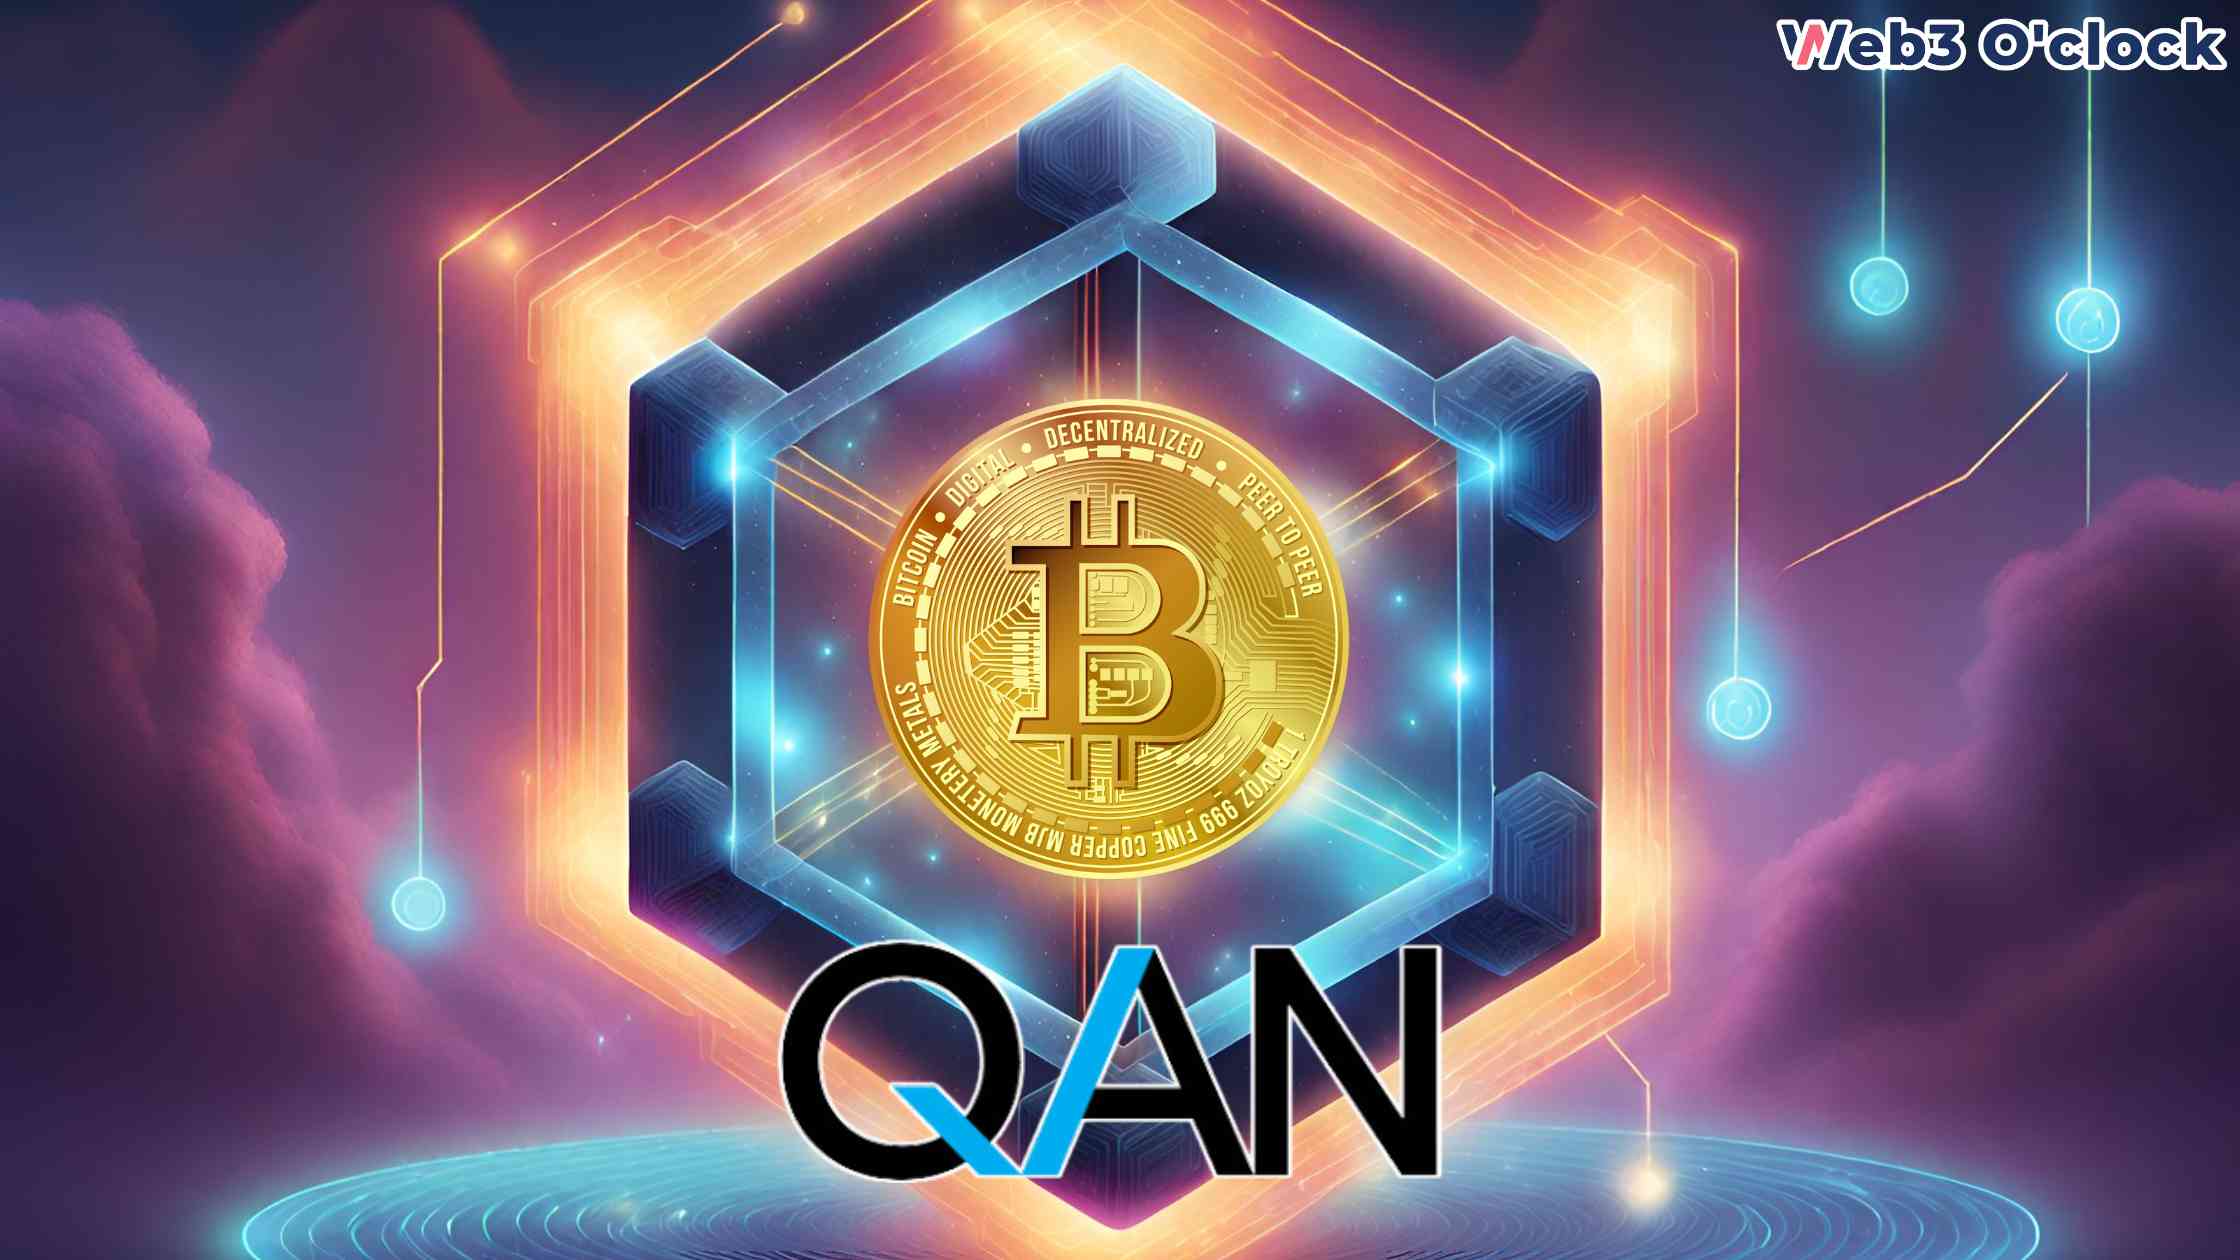 QANPlatform Secures $15M Investment for Quantum-Resistant Blockchain By Web3 O'Clock